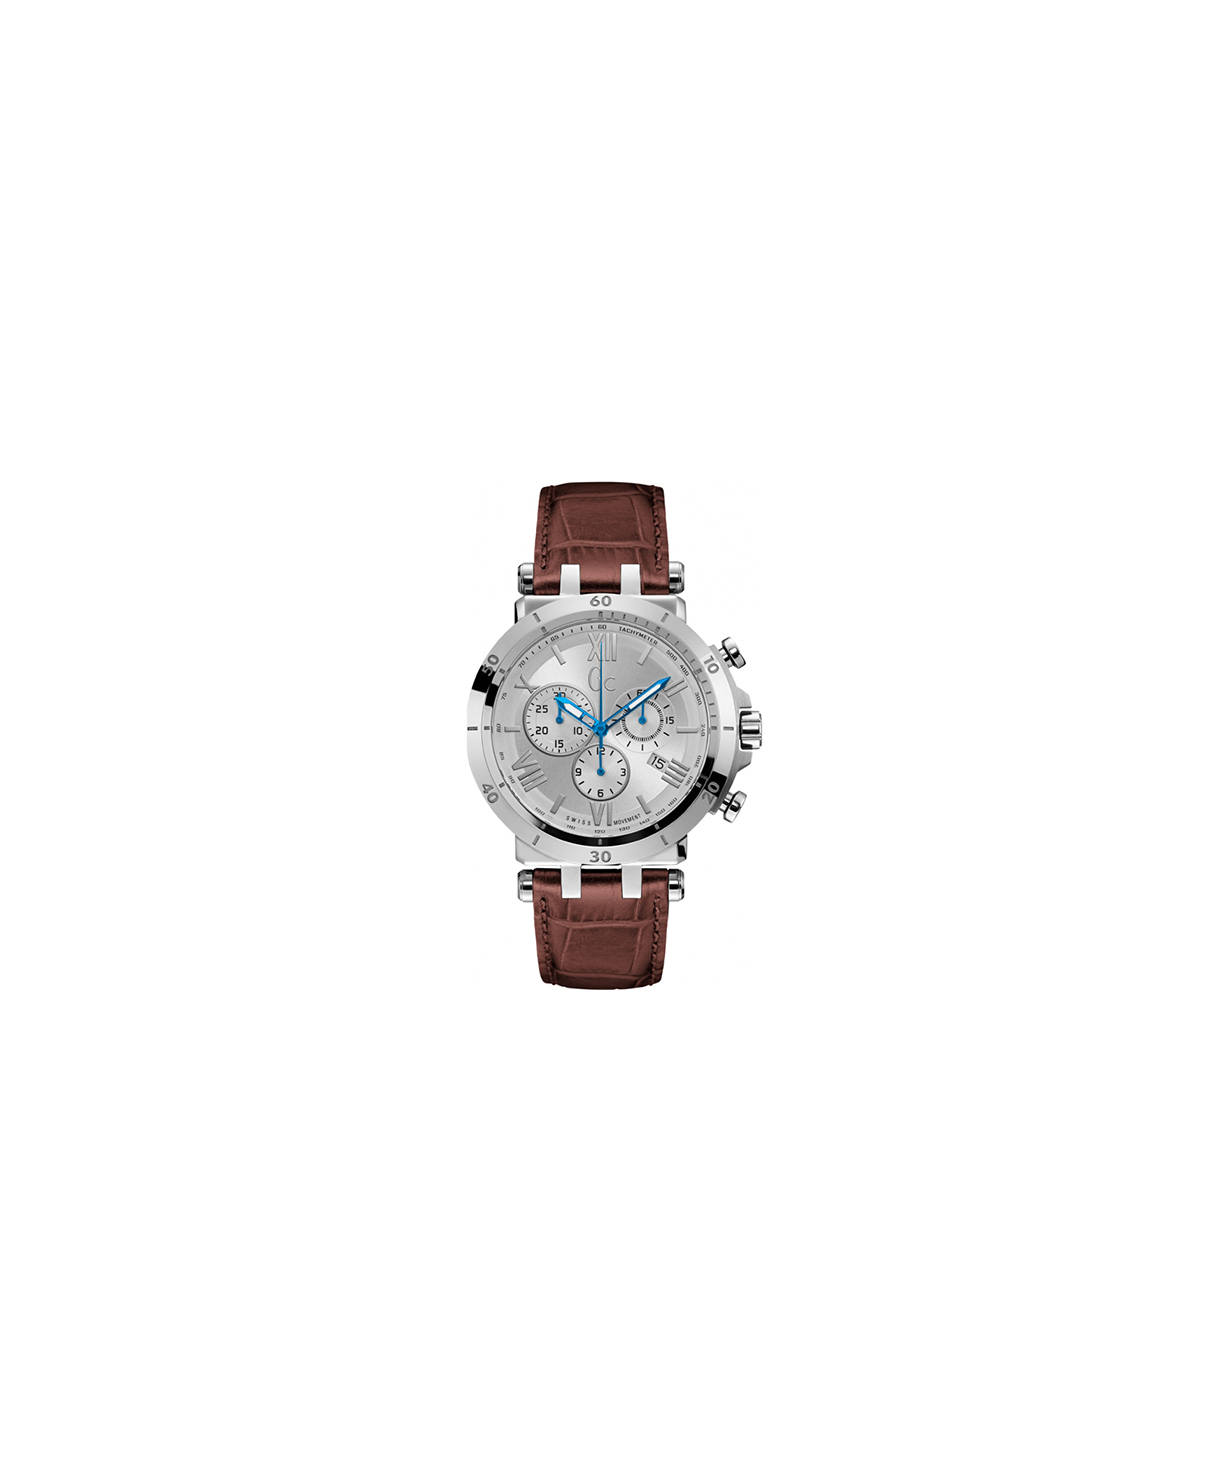 Wrist watch `Gc` Y44001G1